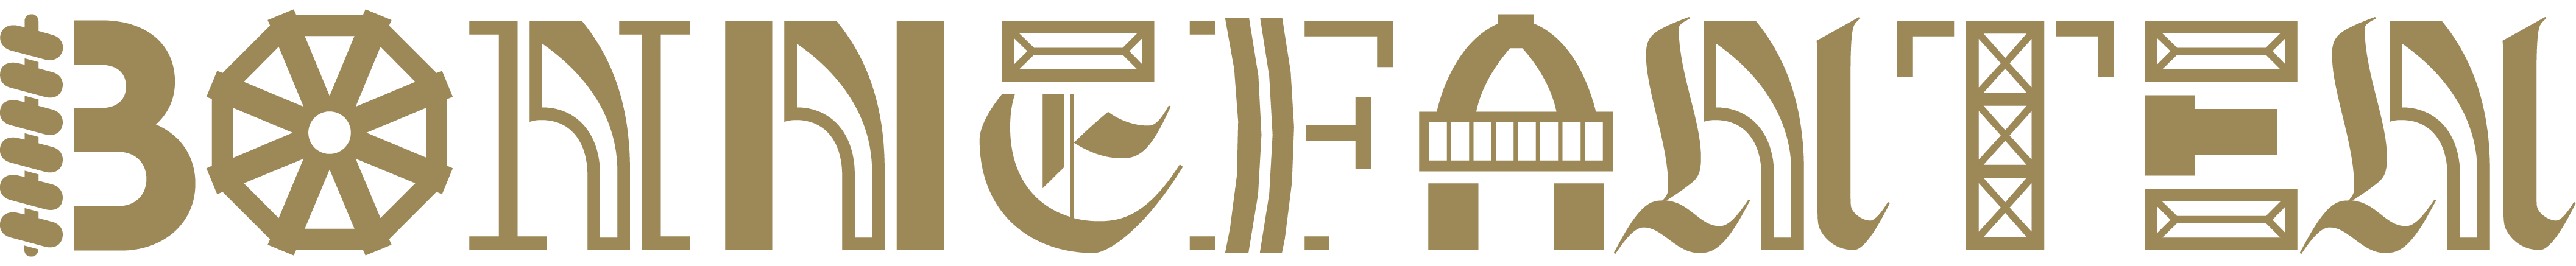 logo Bonnefanten